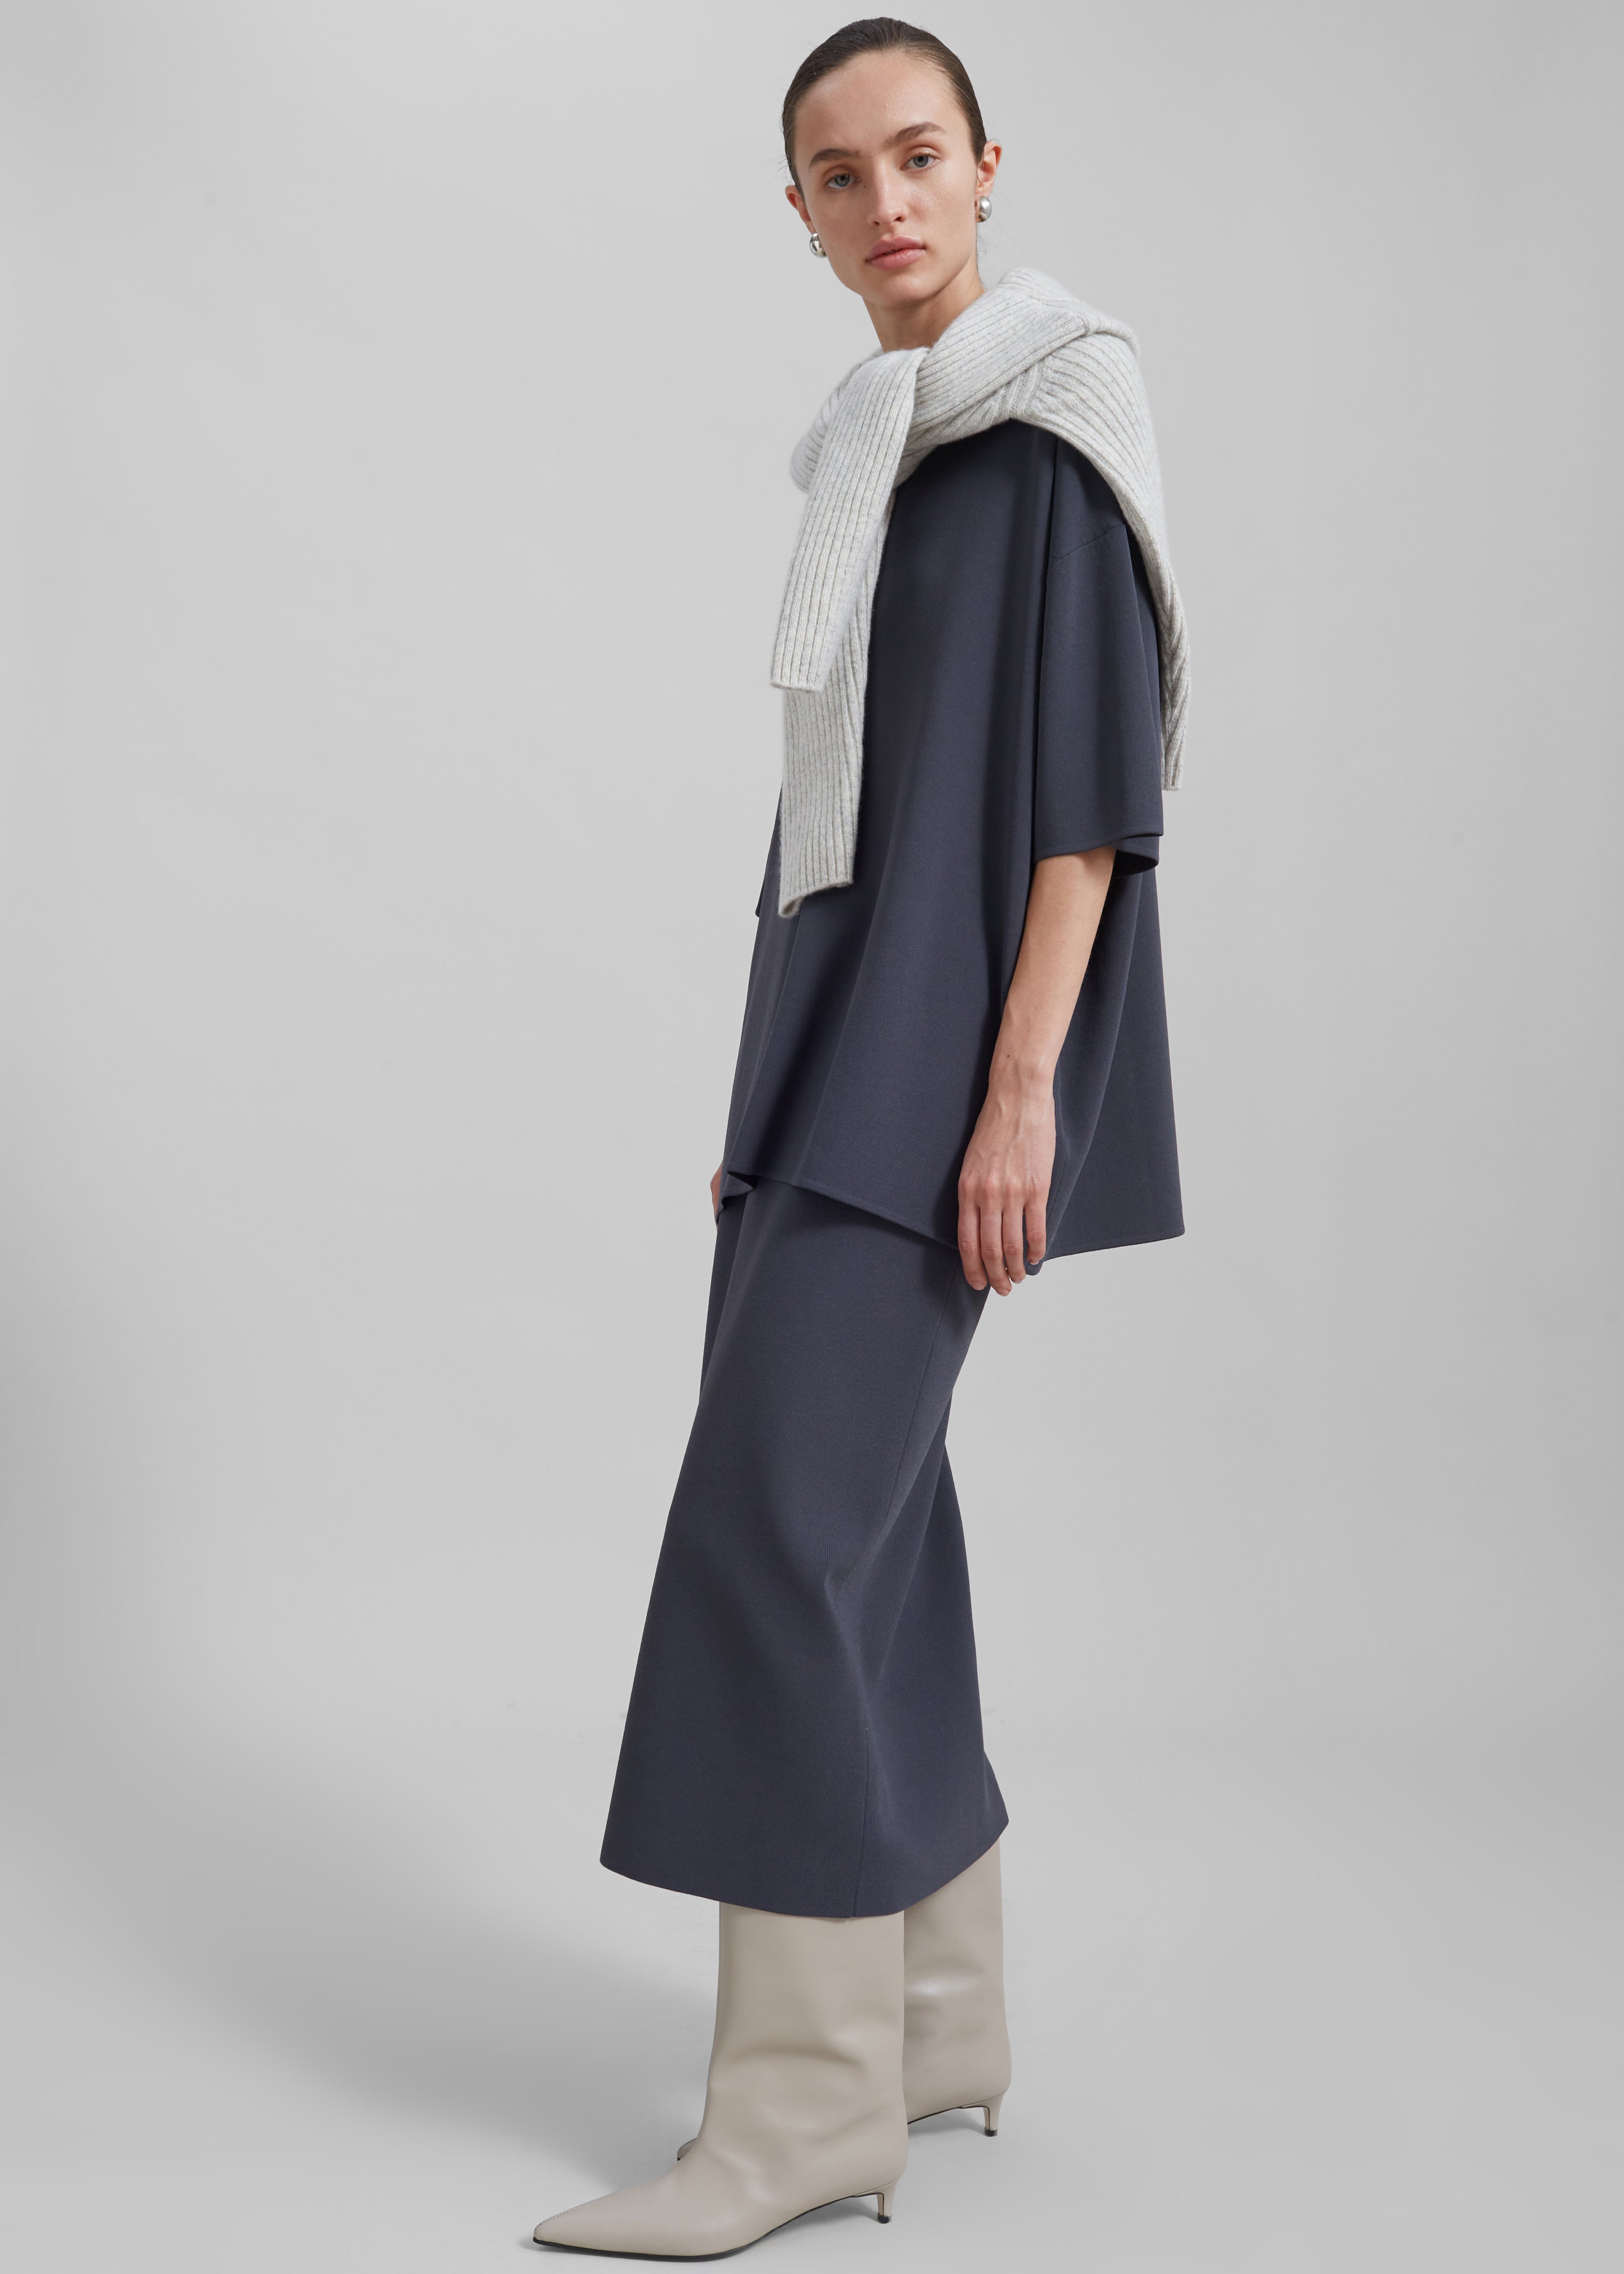 Solange Knit Pencil Skirt - Grey - 3